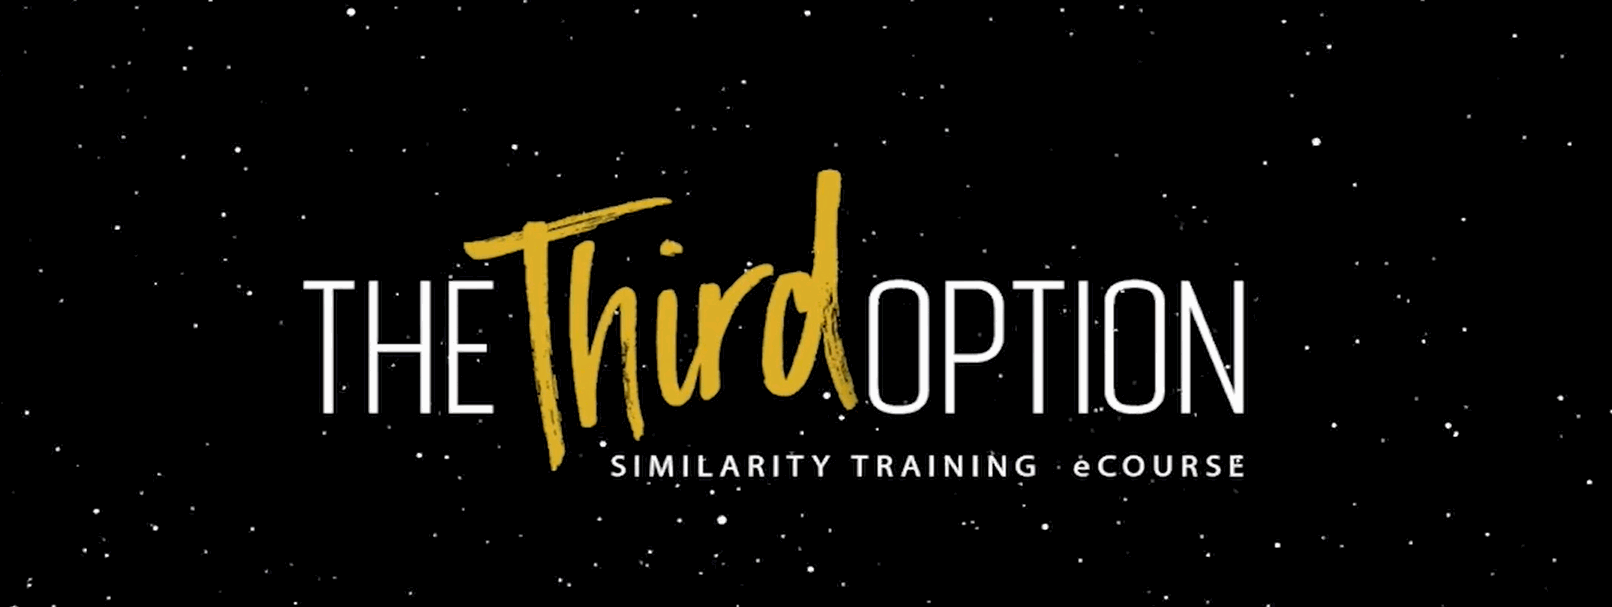 third_option_training_banner_1600_x_600